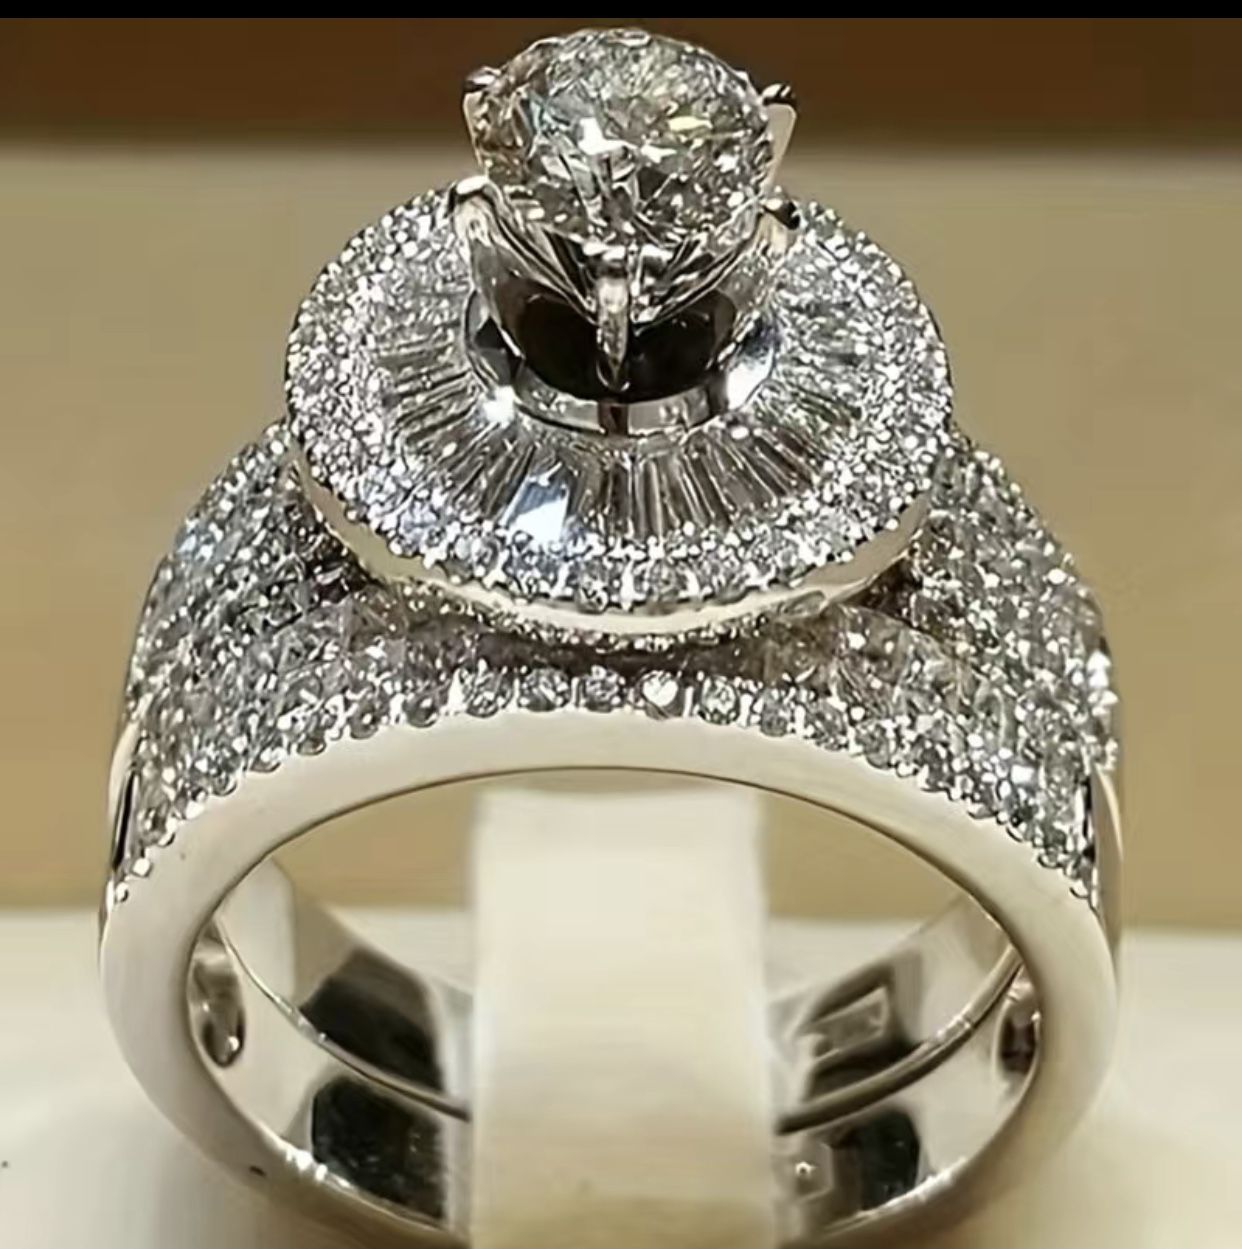 *SALE* 2 PC Created White Sapphire  Wedding Ring Set Sizes 5/6/7/8/9/10/11